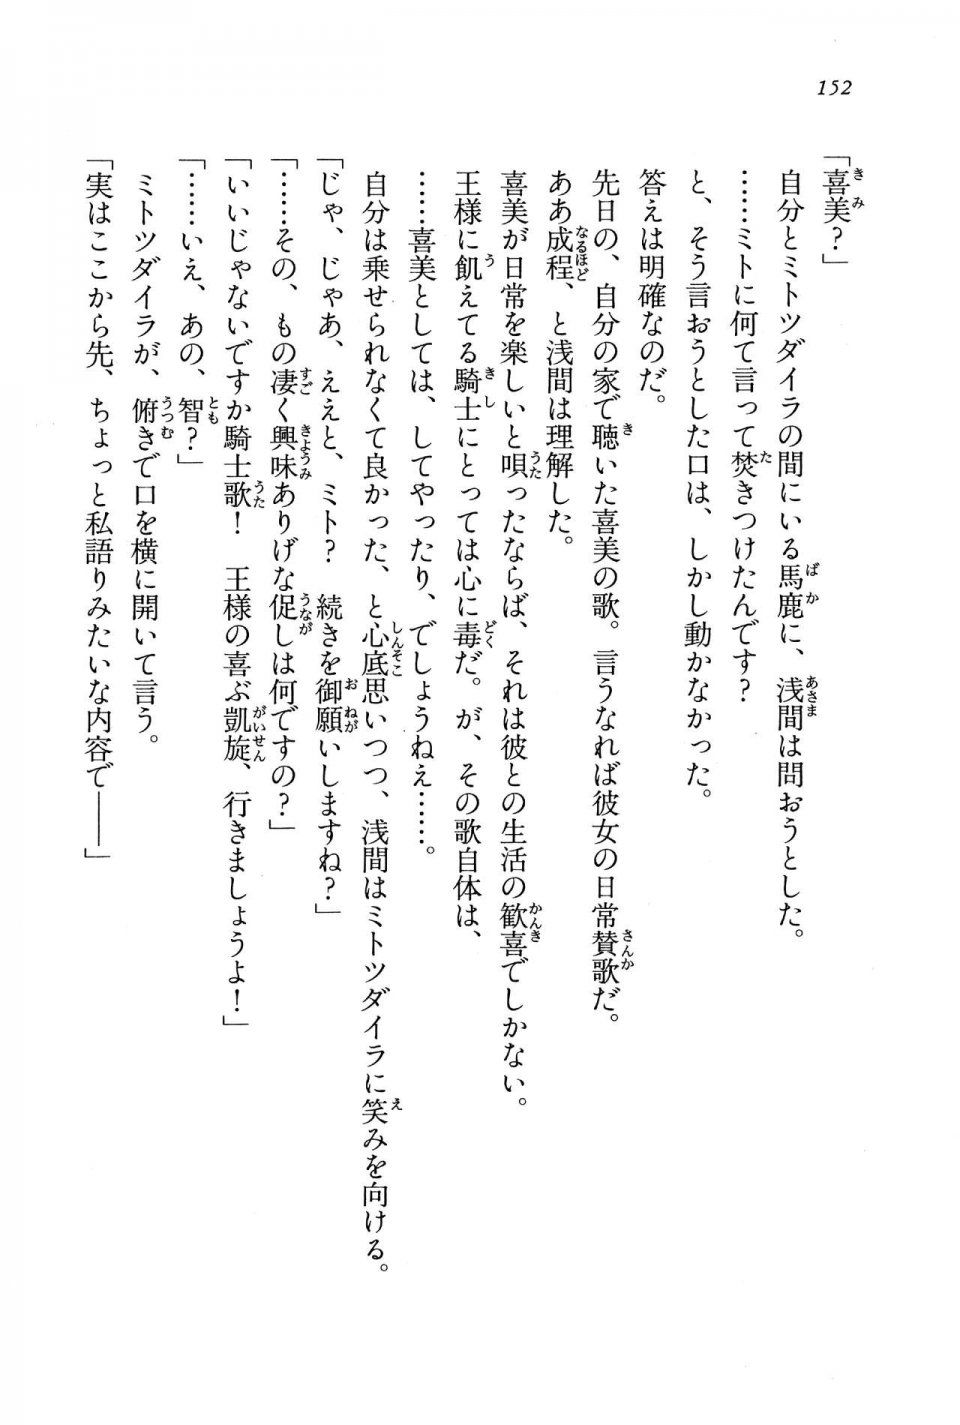 Kyoukai Senjou no Horizon BD Special Mininovel Vol 8(4B) - Photo #156